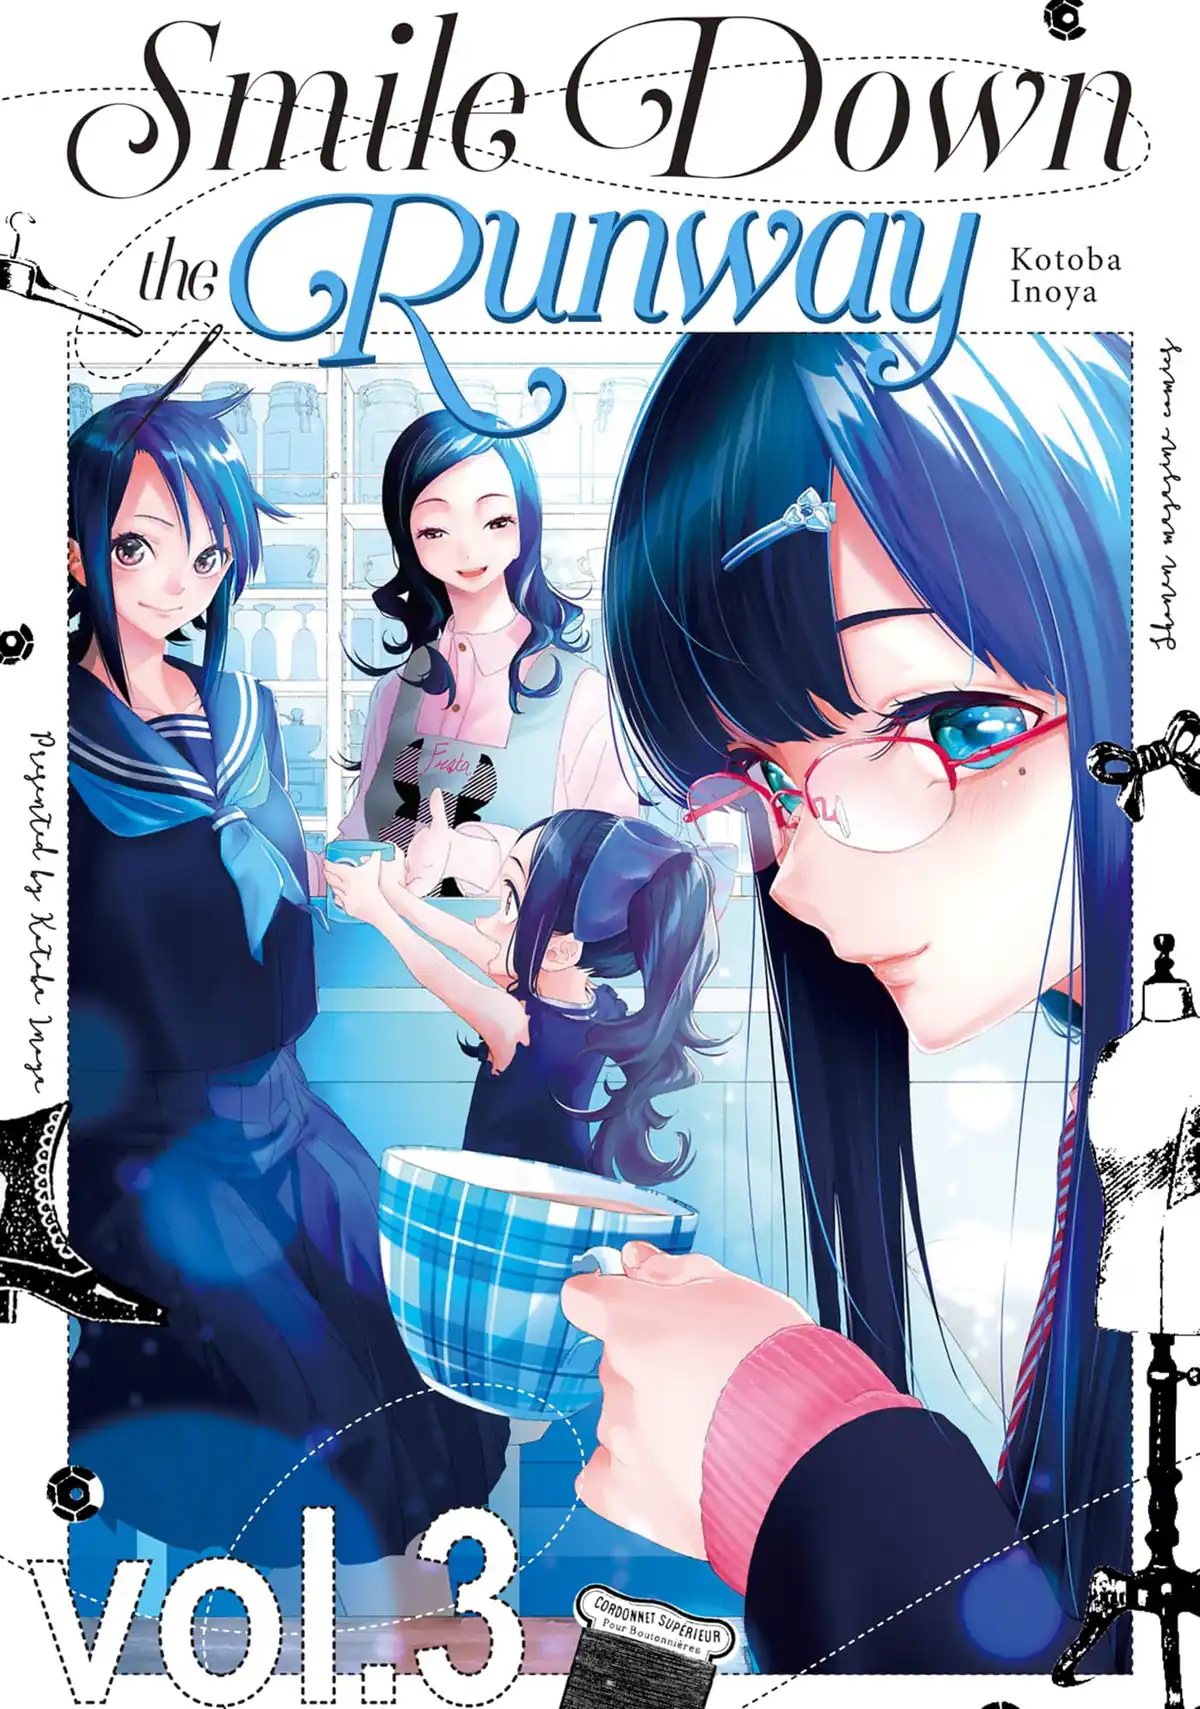 Runway de Waratte Manga - Chapter 151 - Manga Rock Team - Read